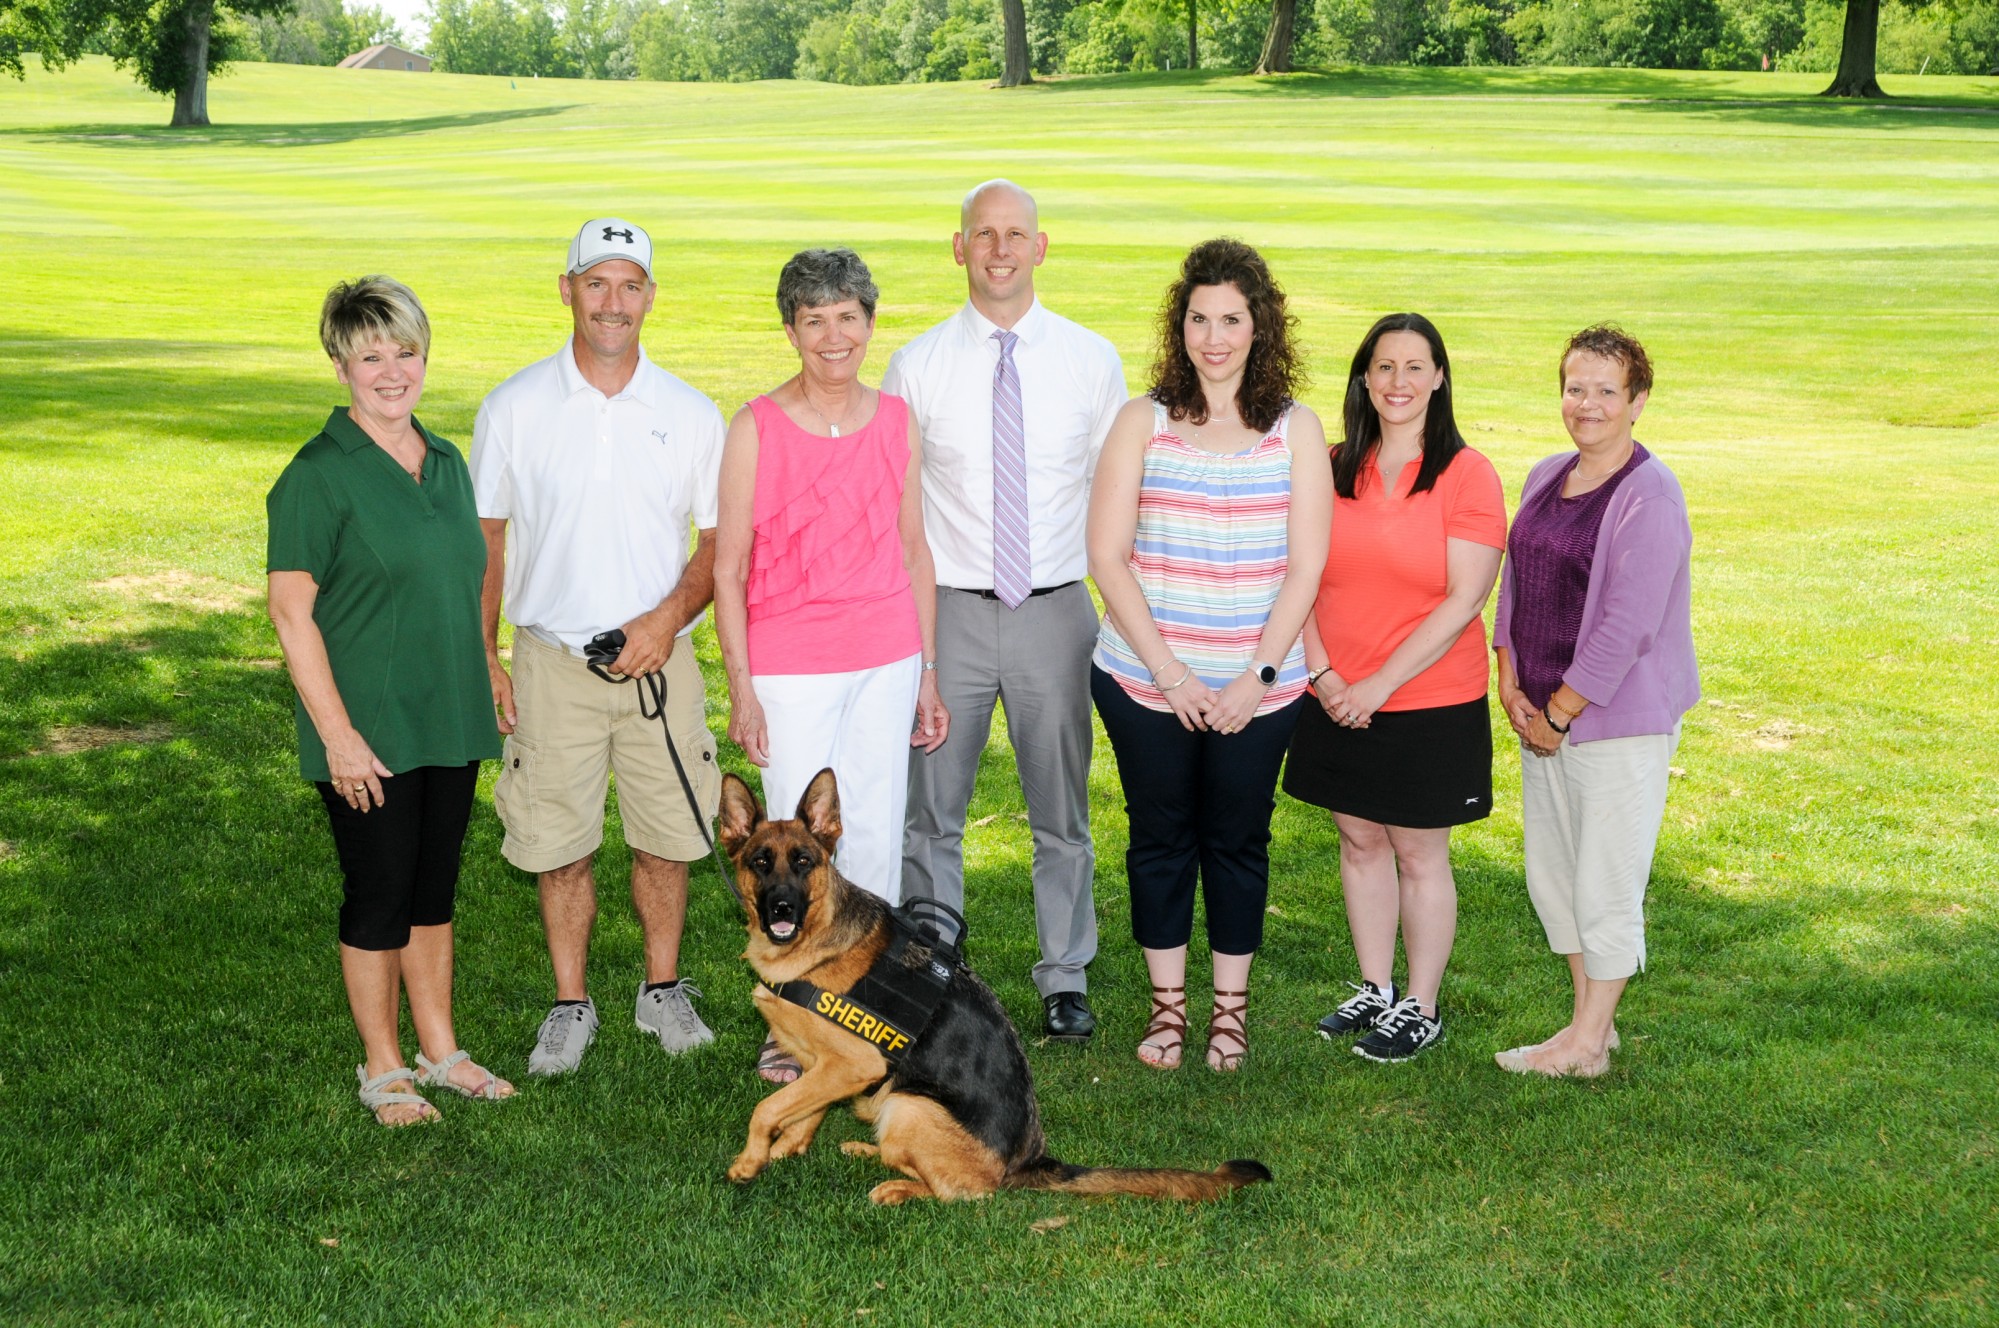 Samaritan Hospital Foundation Charity Golf Classic Raises $41,500 to Support Local Initiatives